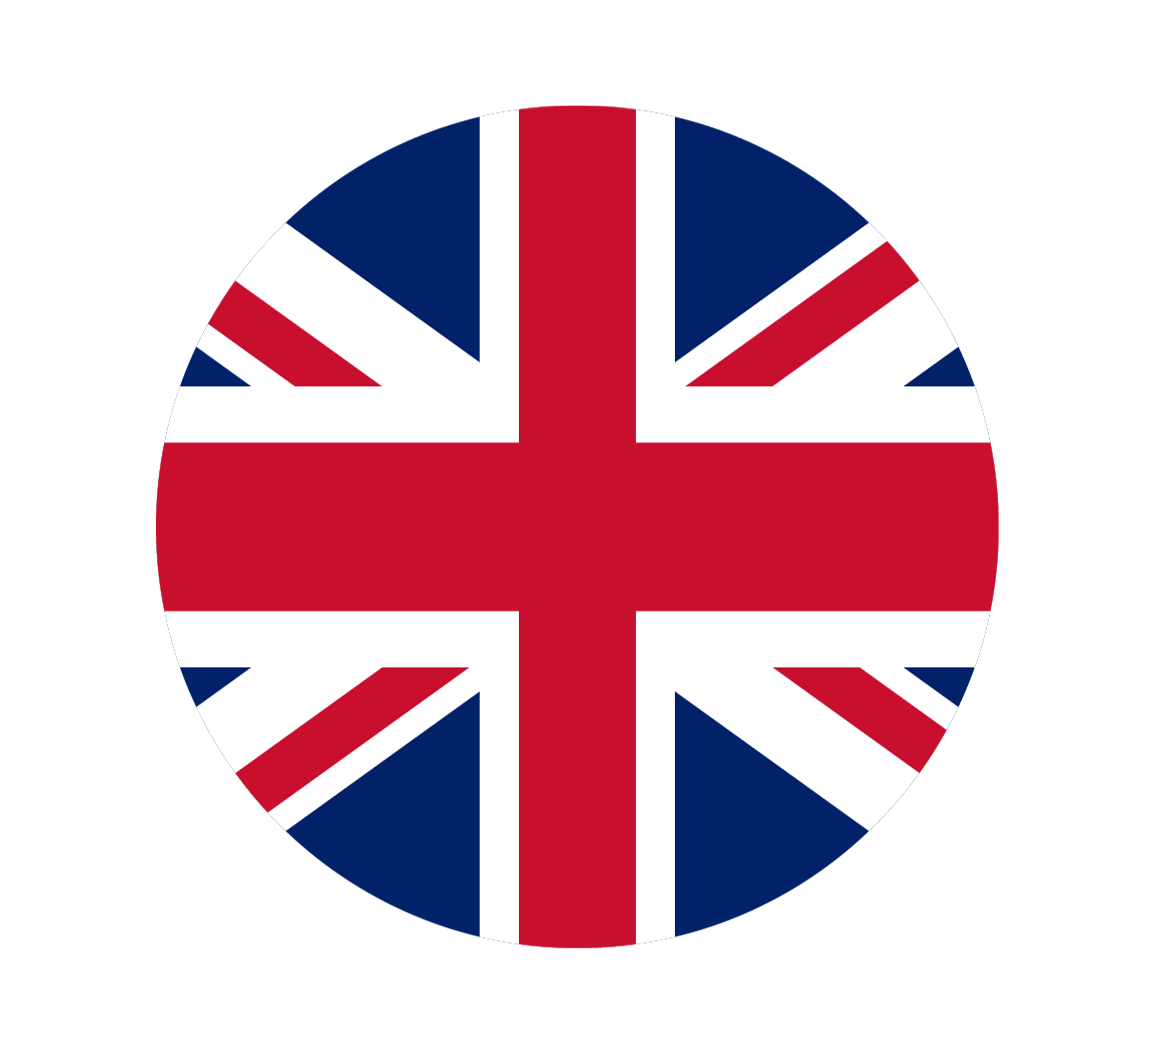 United Kingdom flag in a circle